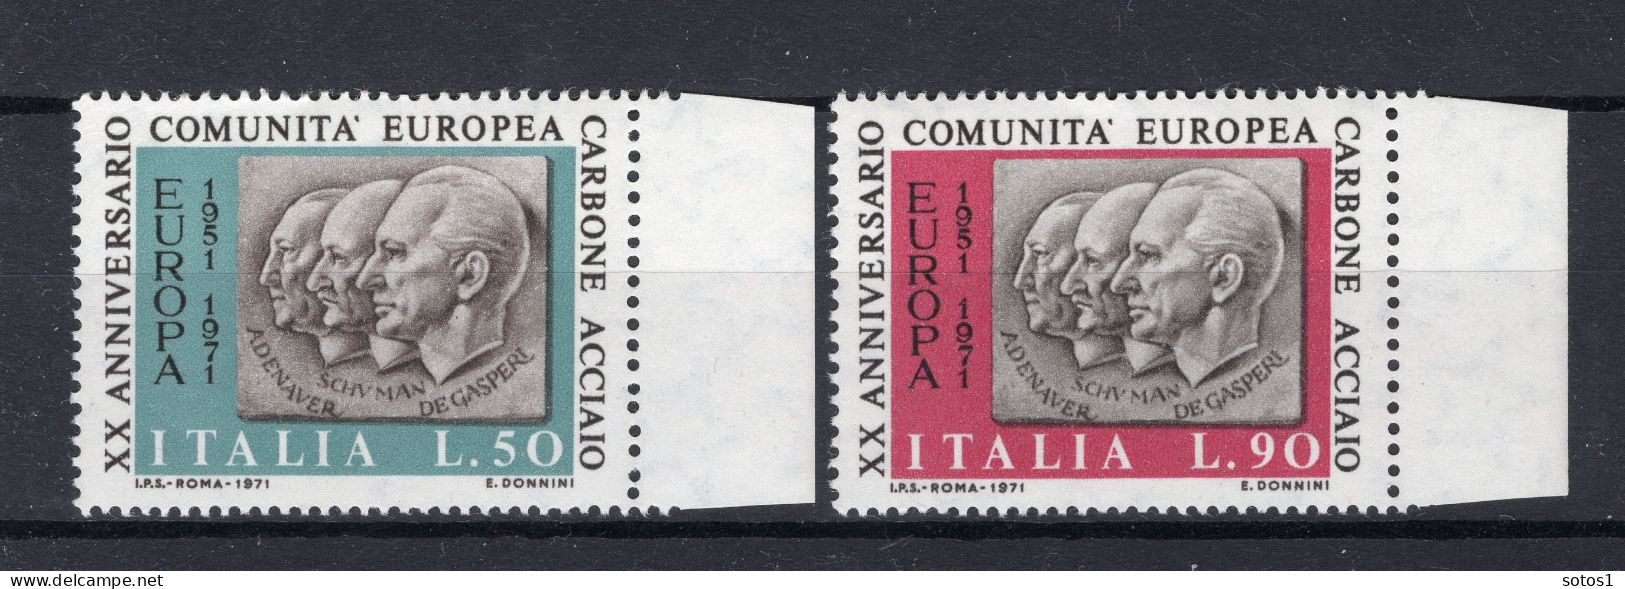 ITALIE Yt. 1070/1071 MNH 1971 - 1971-80: Mint/hinged